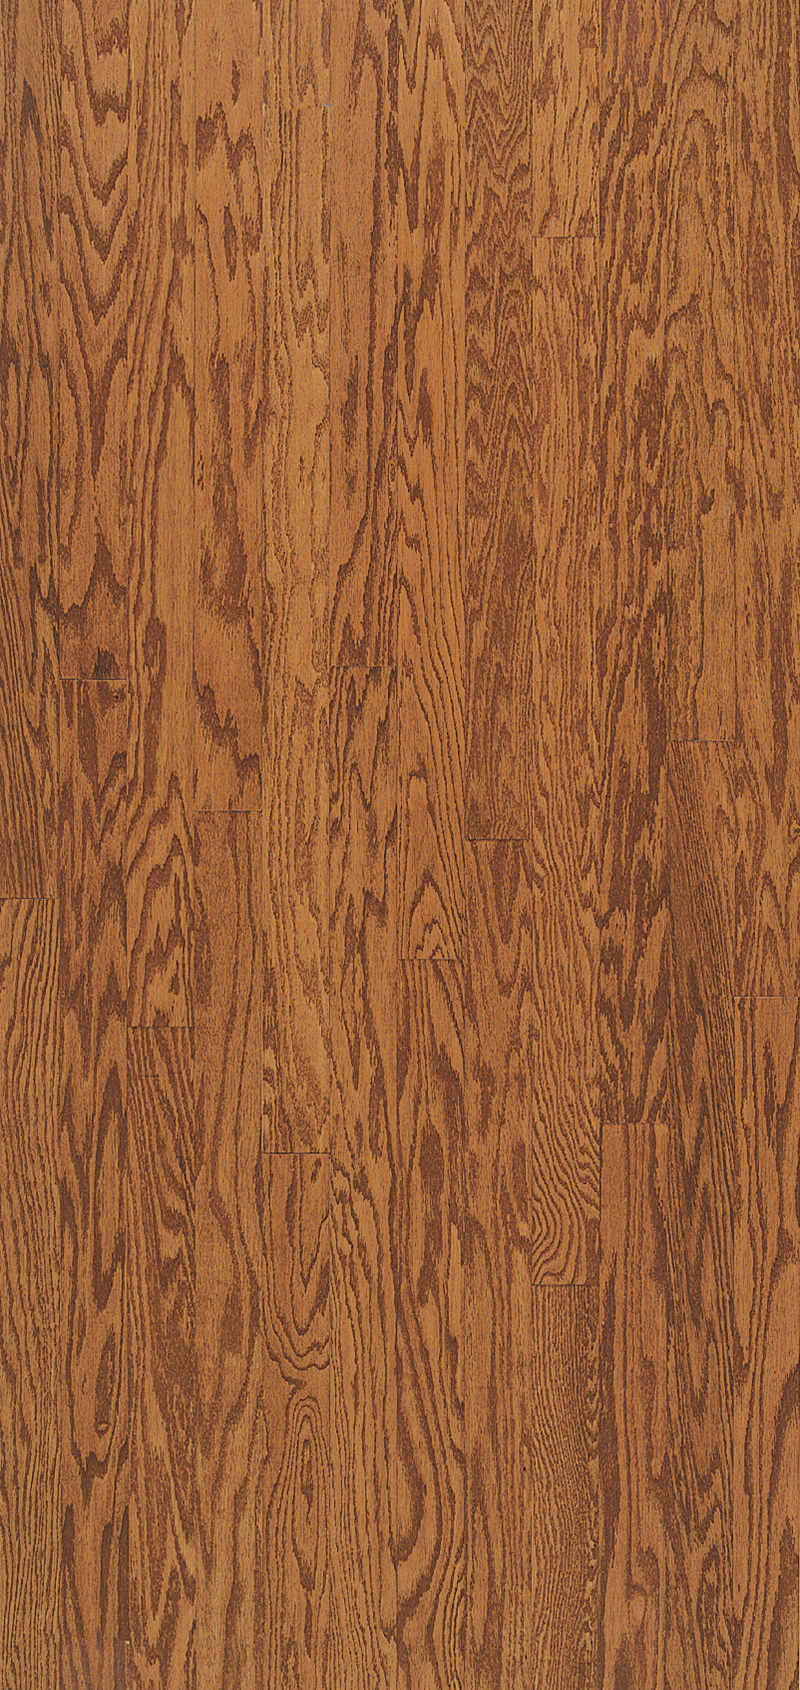 Gunstock Oak 5" - Turlington Lock&Fold Collection - Engineered Hardwood Flooring by Bruce - Hardwood by Bruce Hardwood